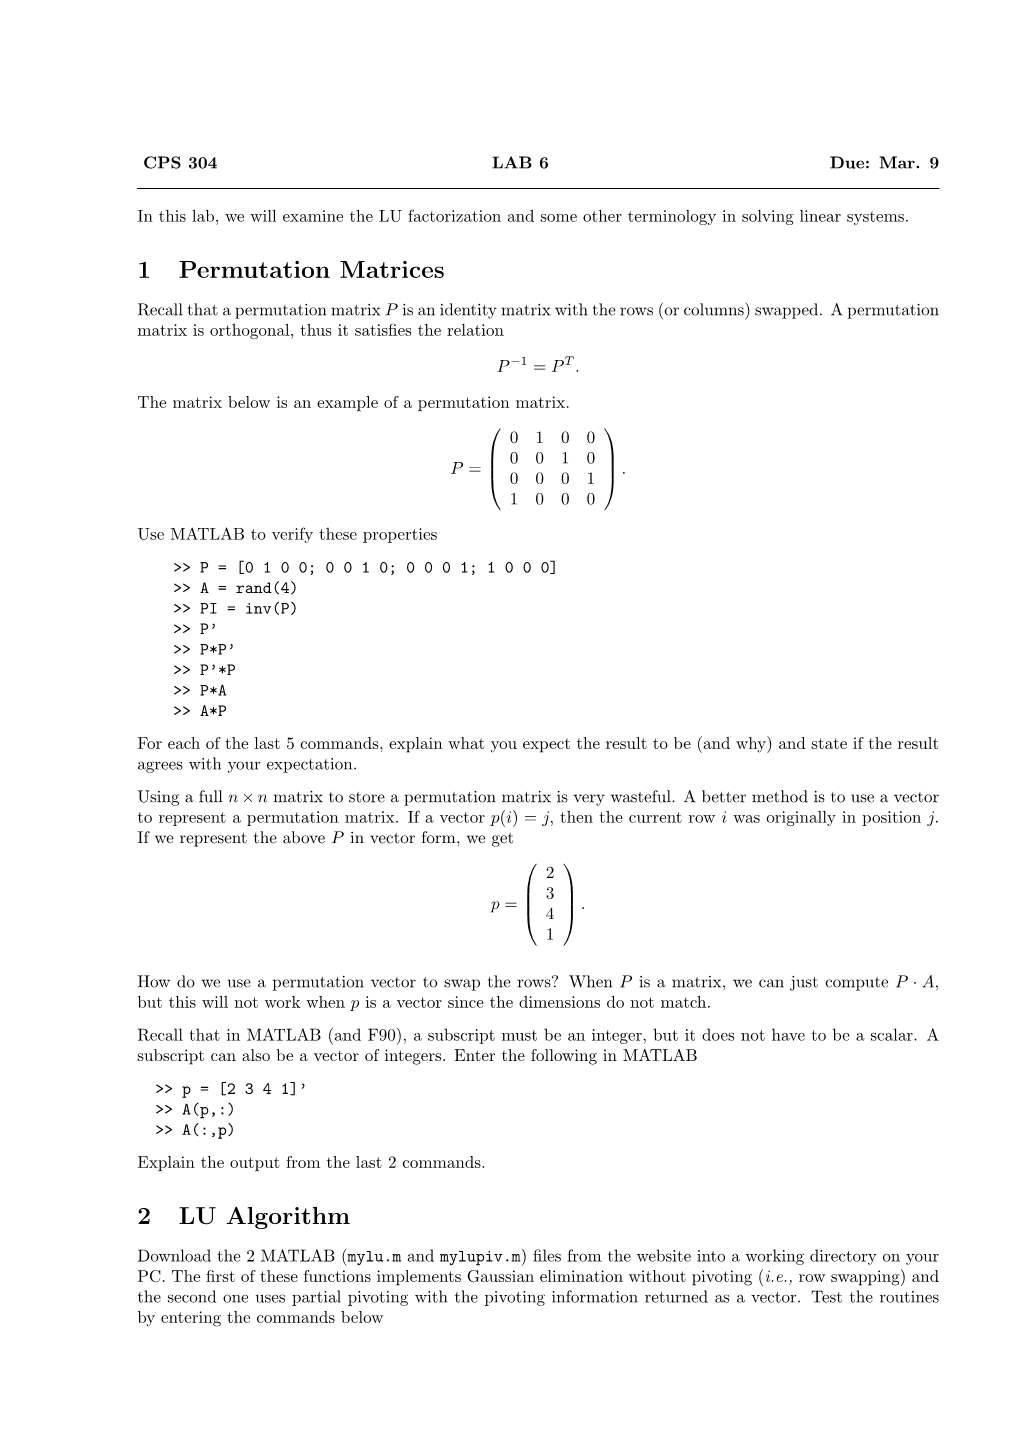 1 Permutation Matrices 2 LU Algorithm